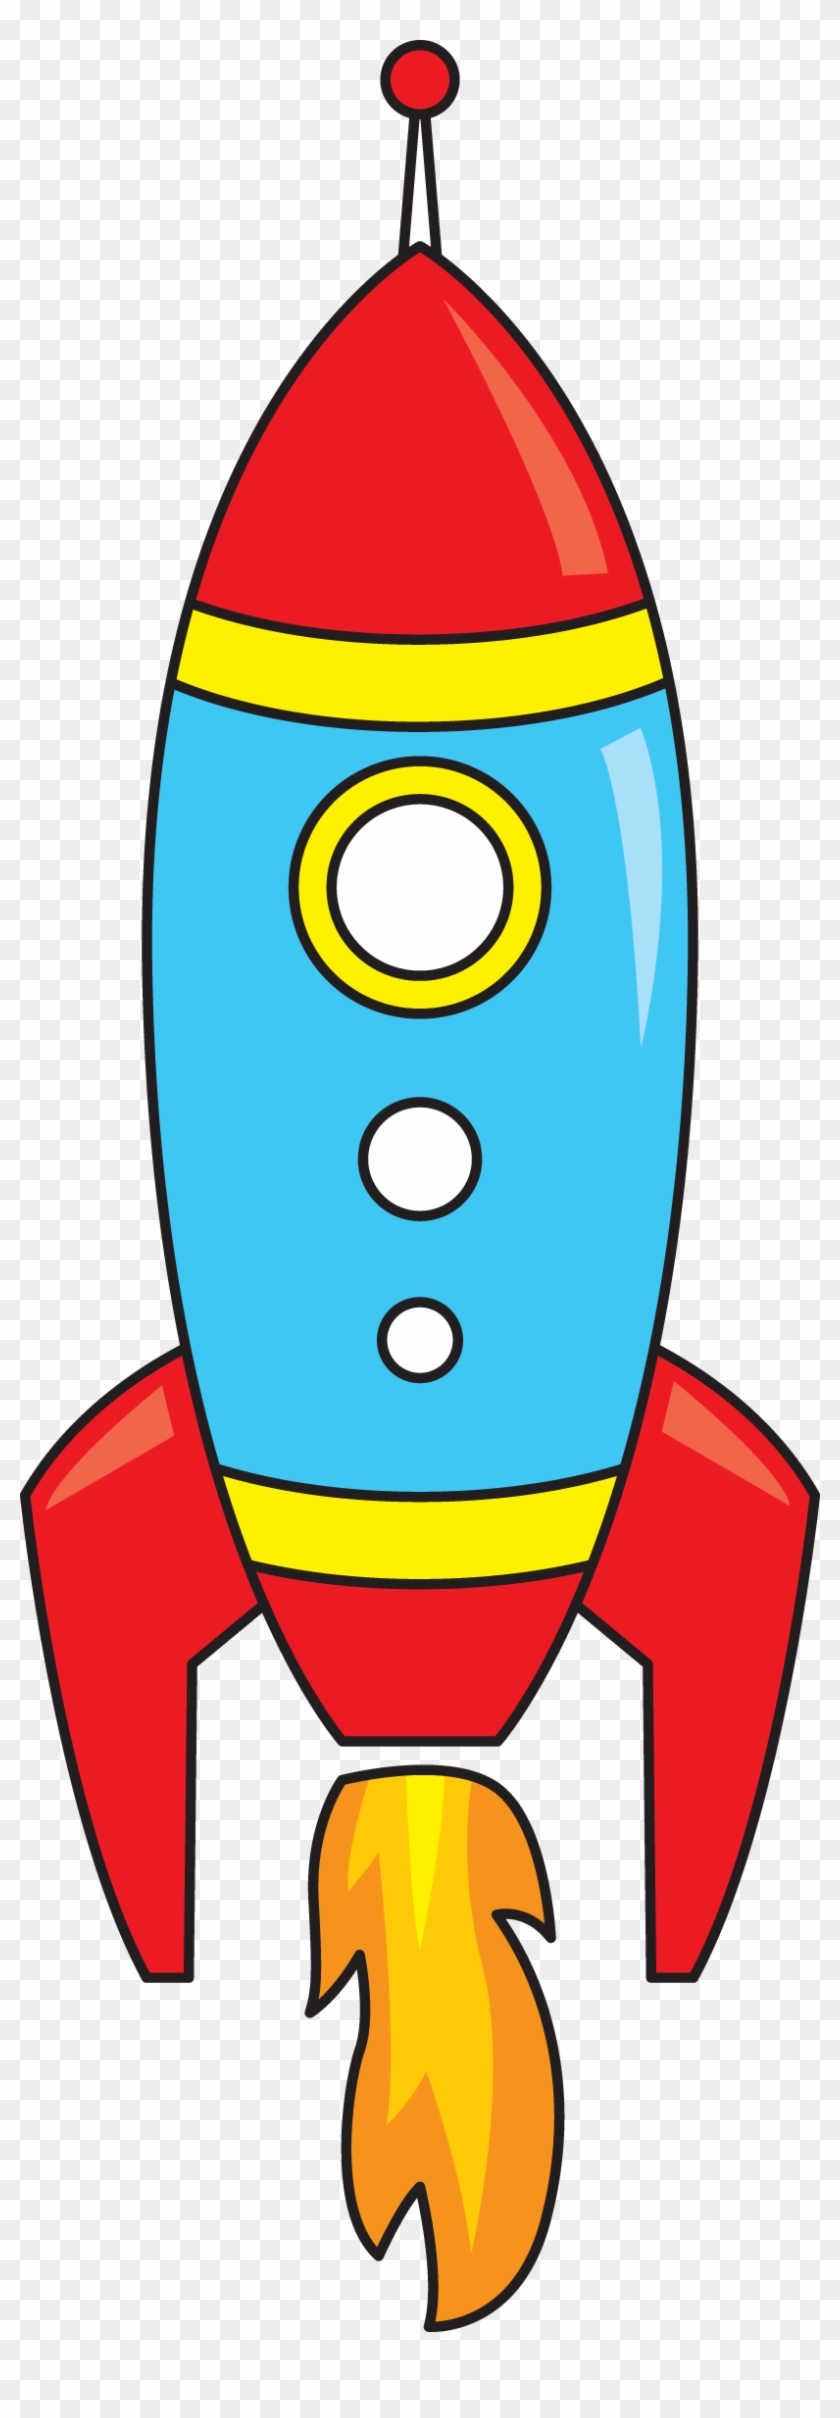 Free Outer Space Clip Art - Space Rocket Clip Art #171369